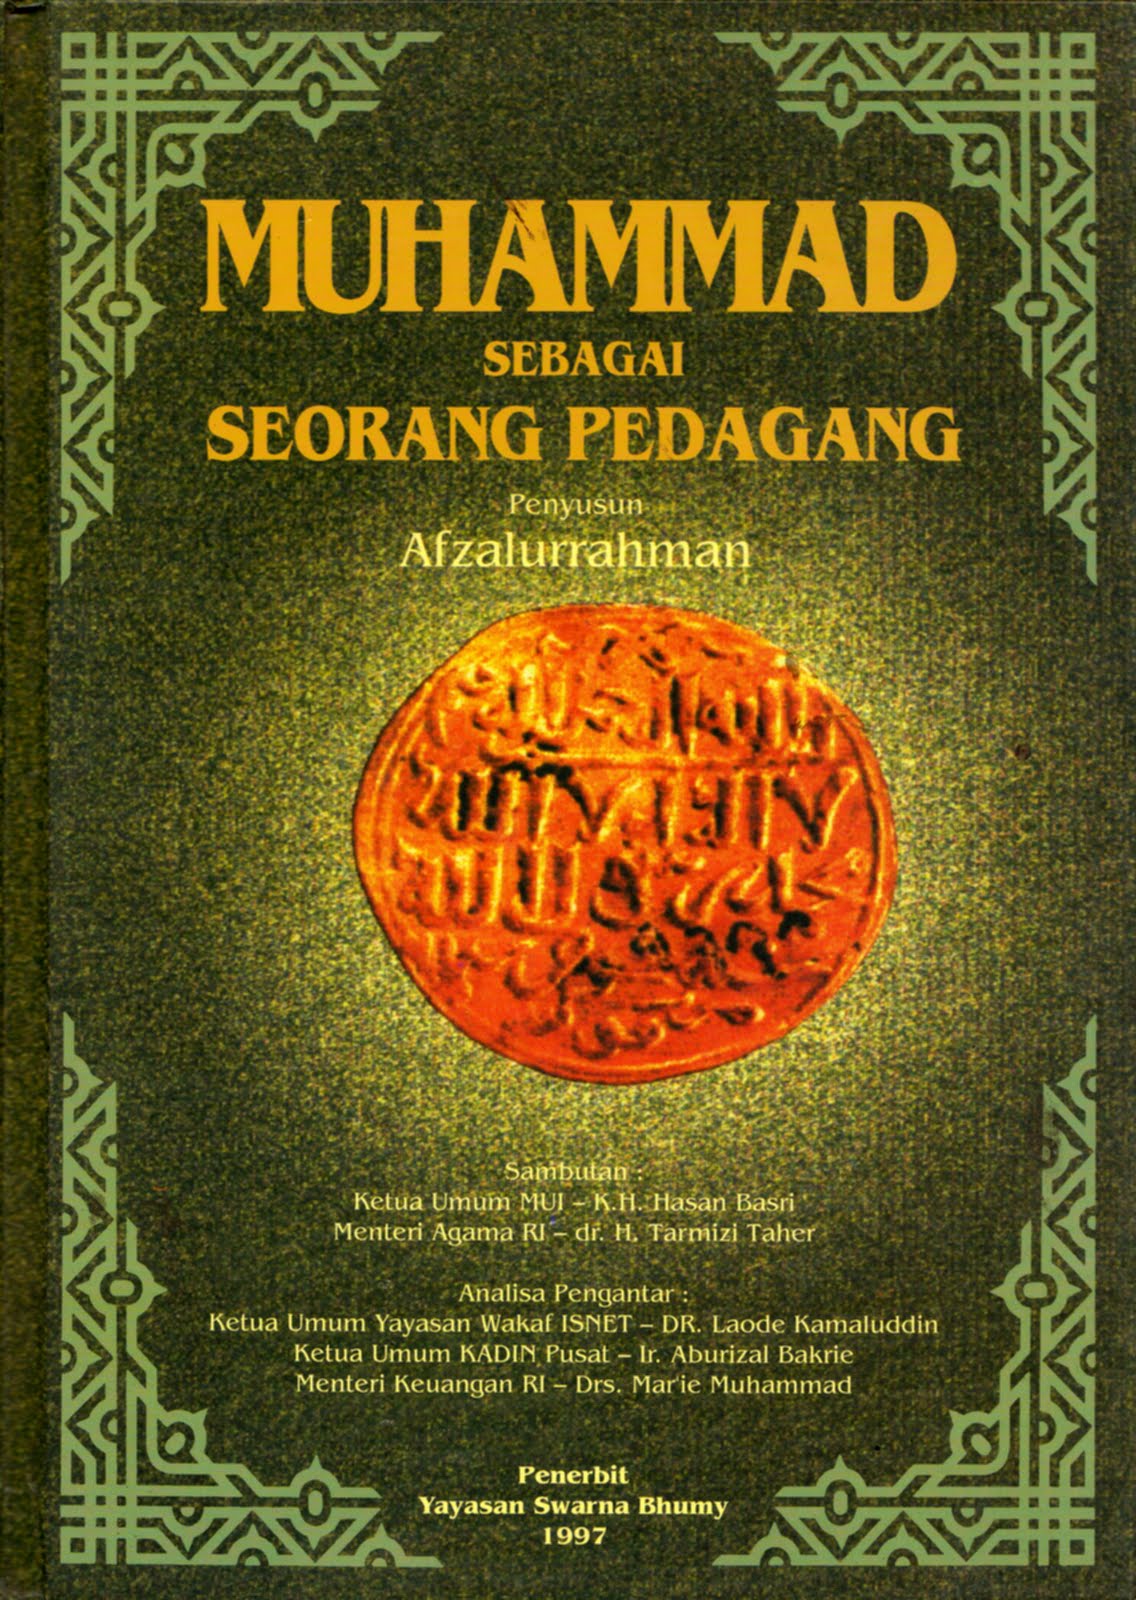 Buku Biografi Rasulullah: 1. Muhammad Sebagai Seorang Pedagang